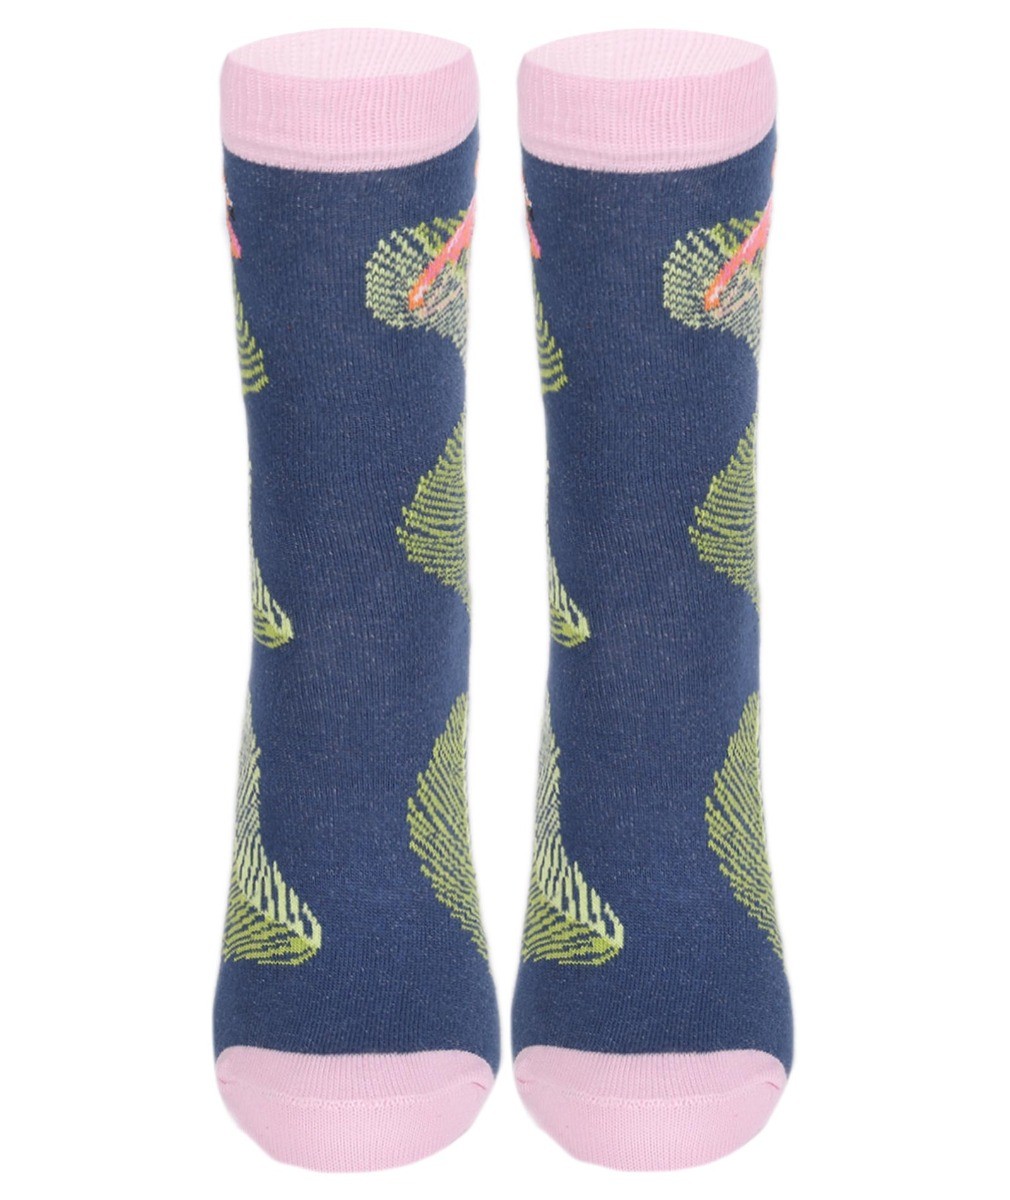 Unisex Kids Flamingo Socks- Novelty - Blue - Green - Pink